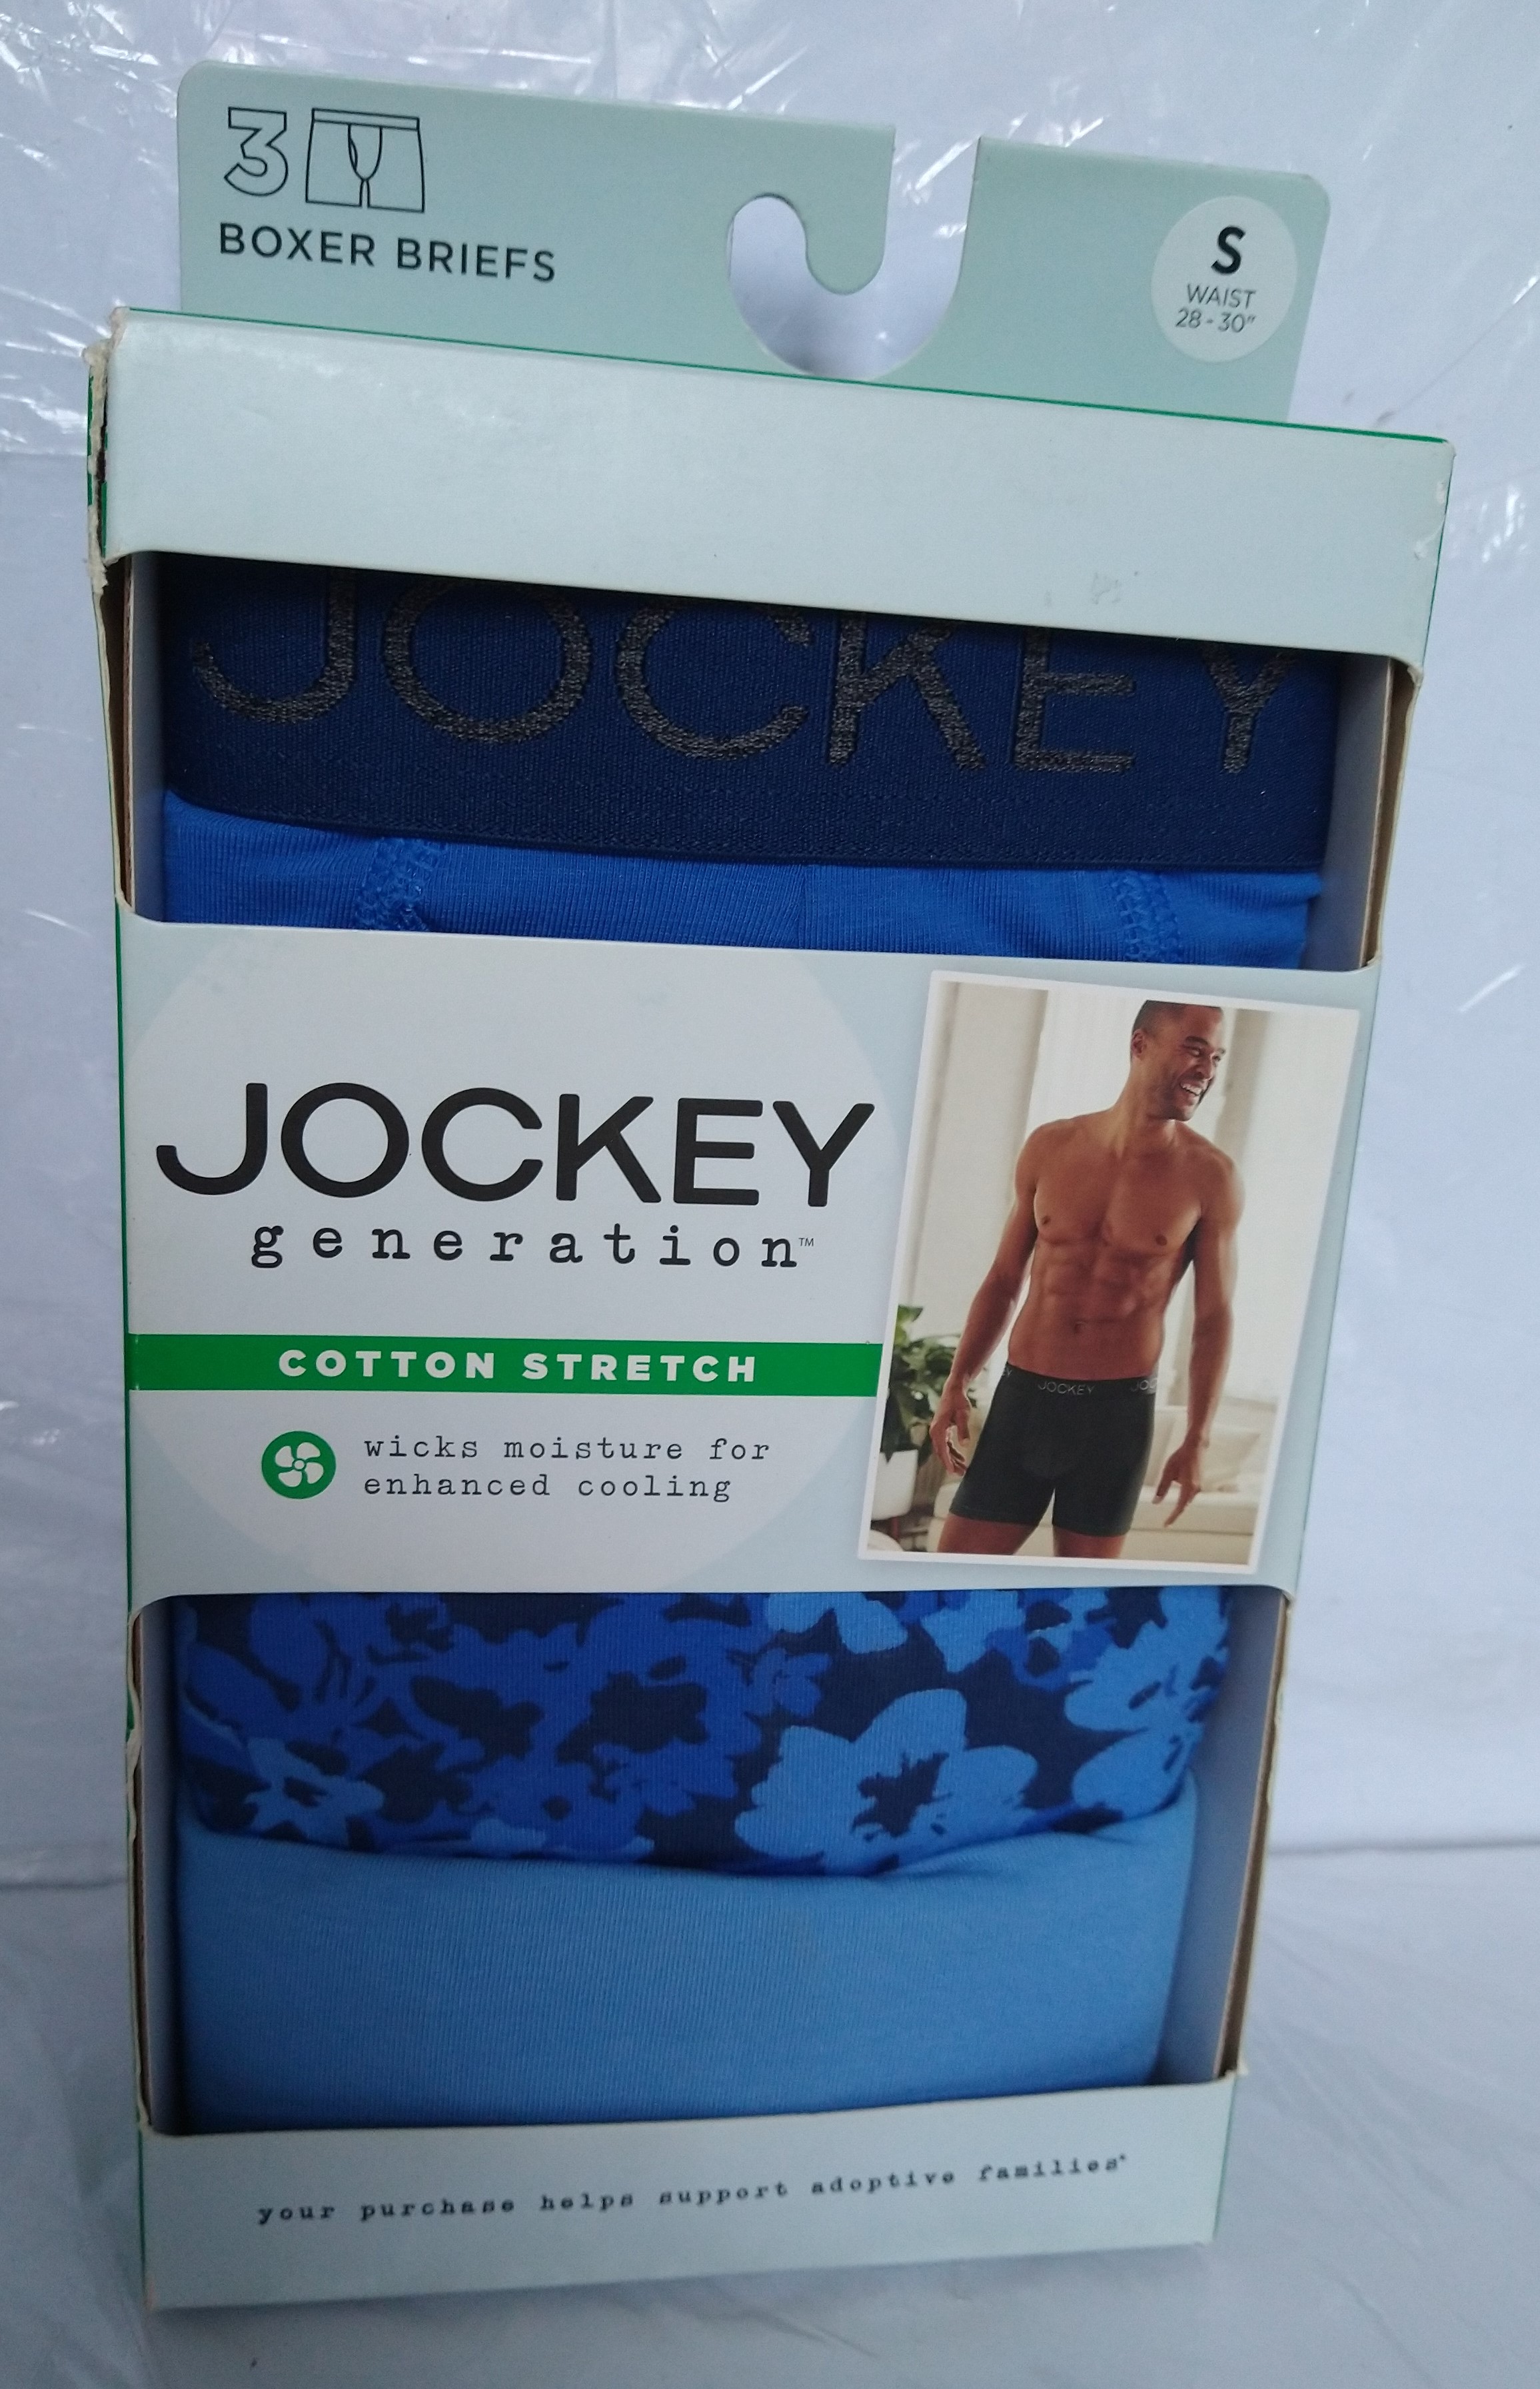 Jockey Generation Boxer Briefs 3-Pack Cotton Stretch Small NewUSA